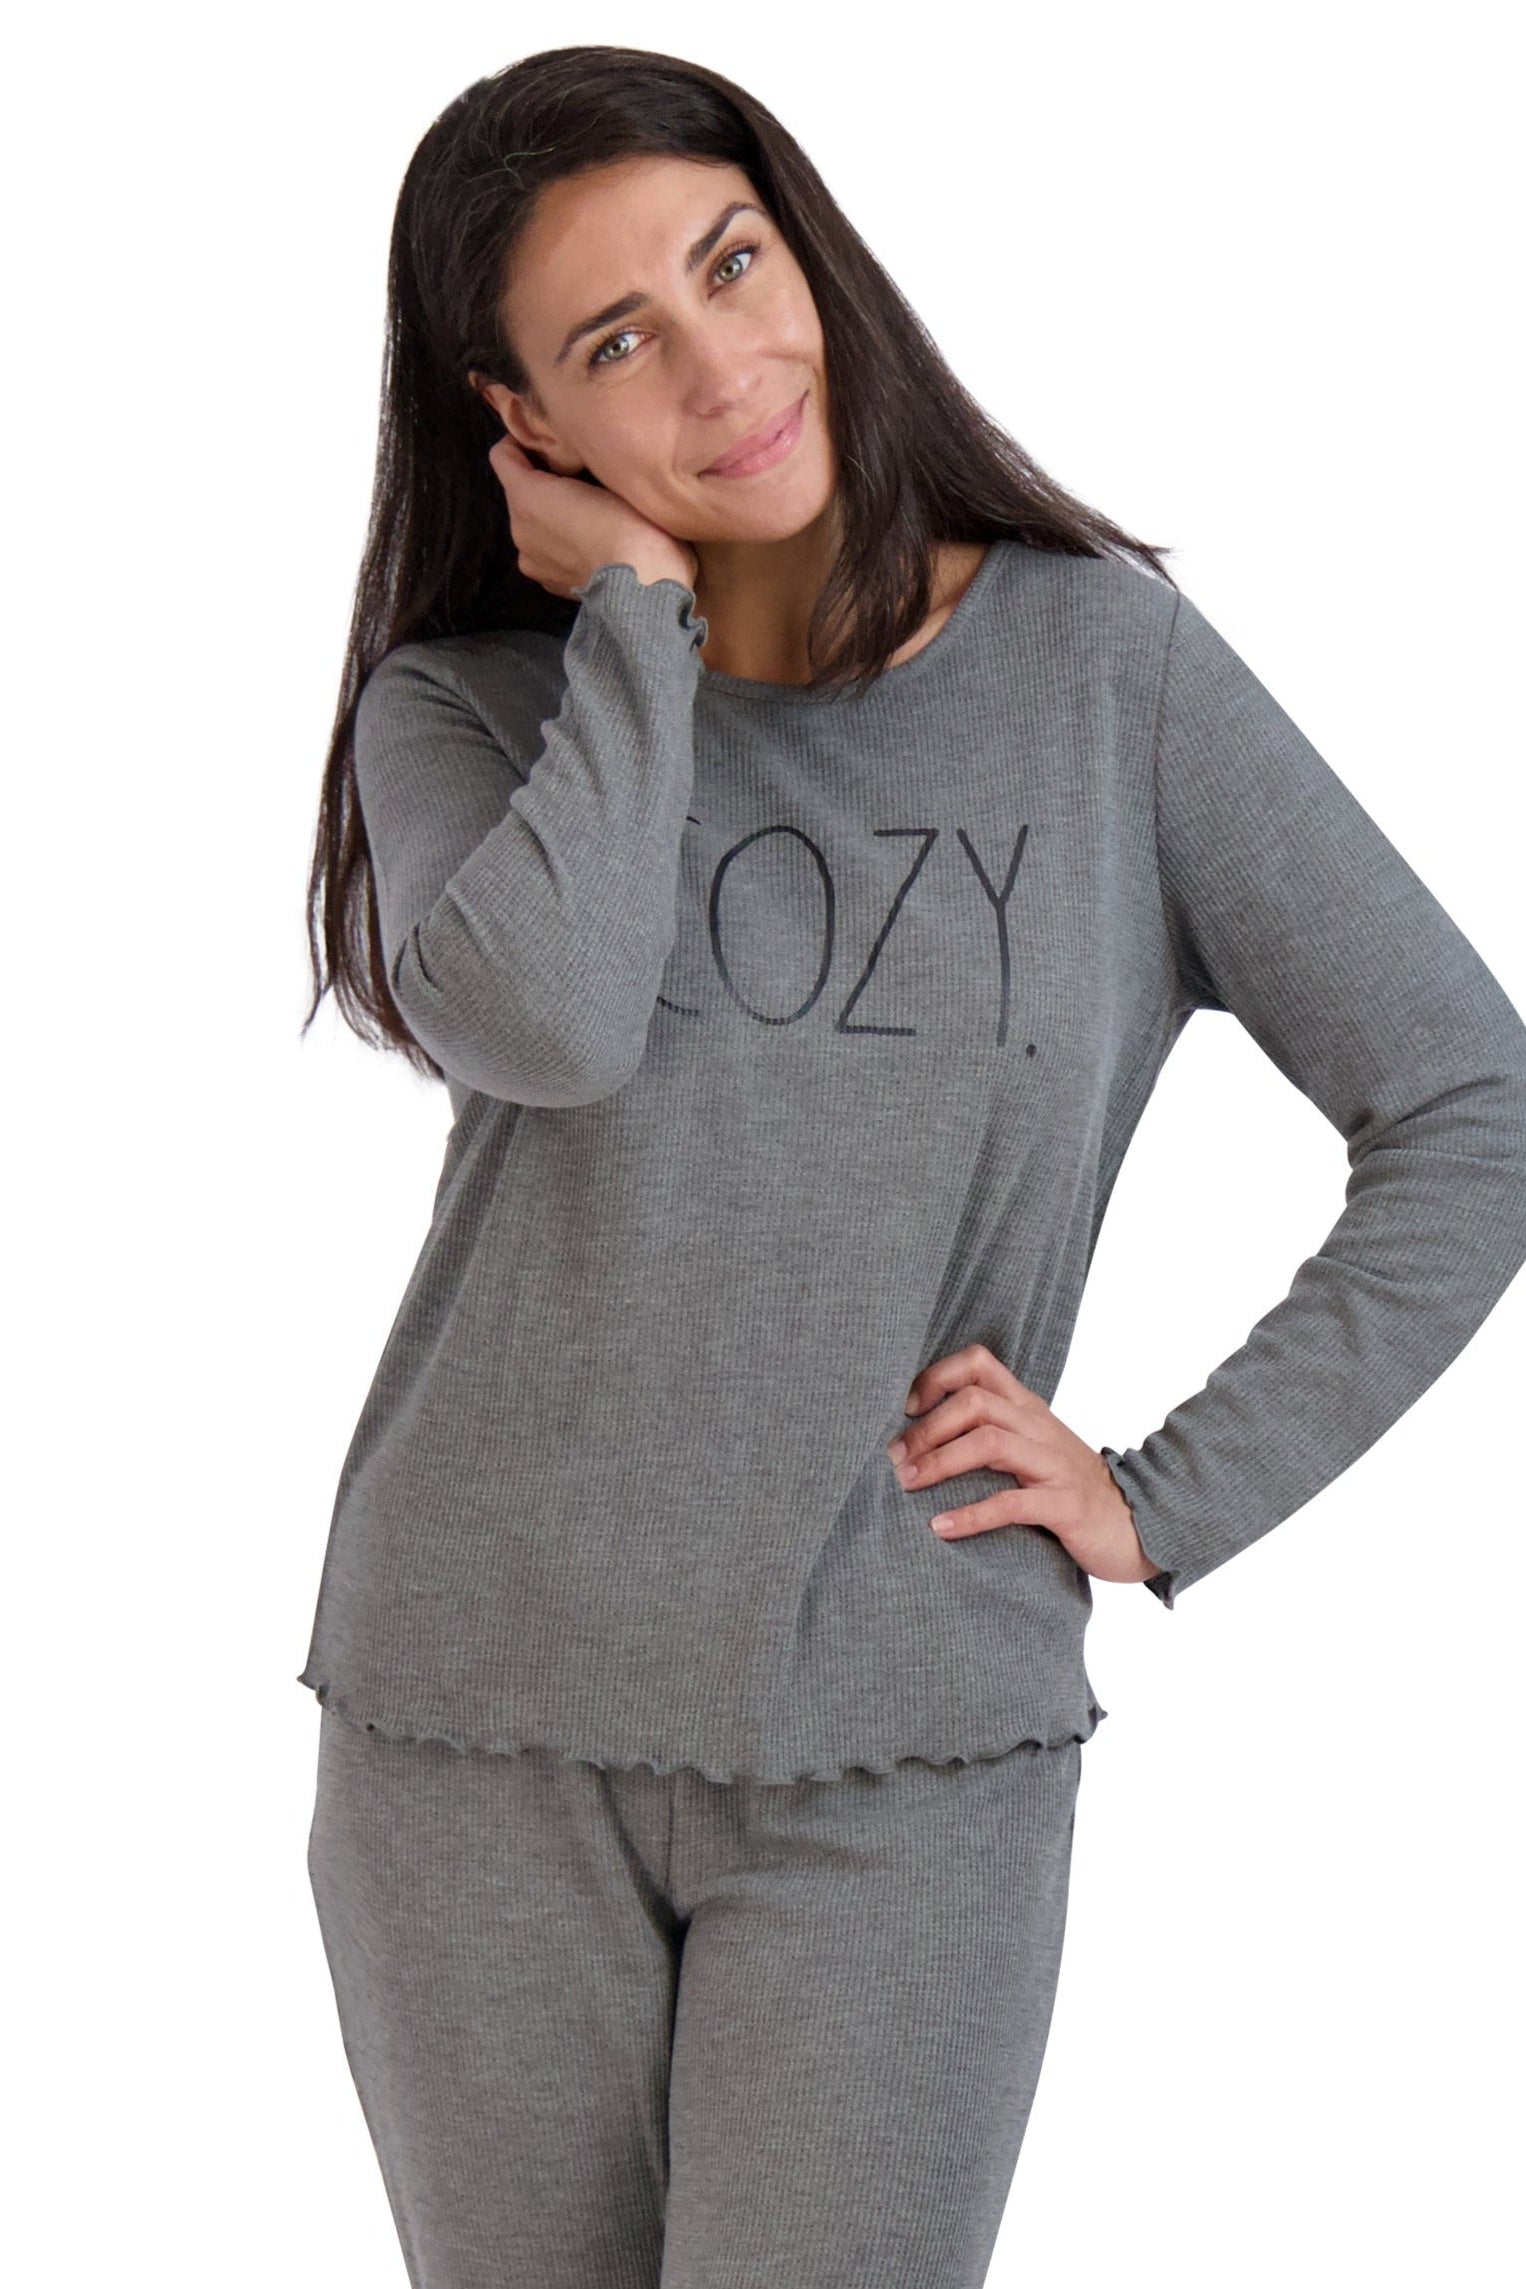 Women's "COZY" Long Sleeve Top and Joggers Waffle Lettuce Hem Pajama Set - Rae Dunn Wear